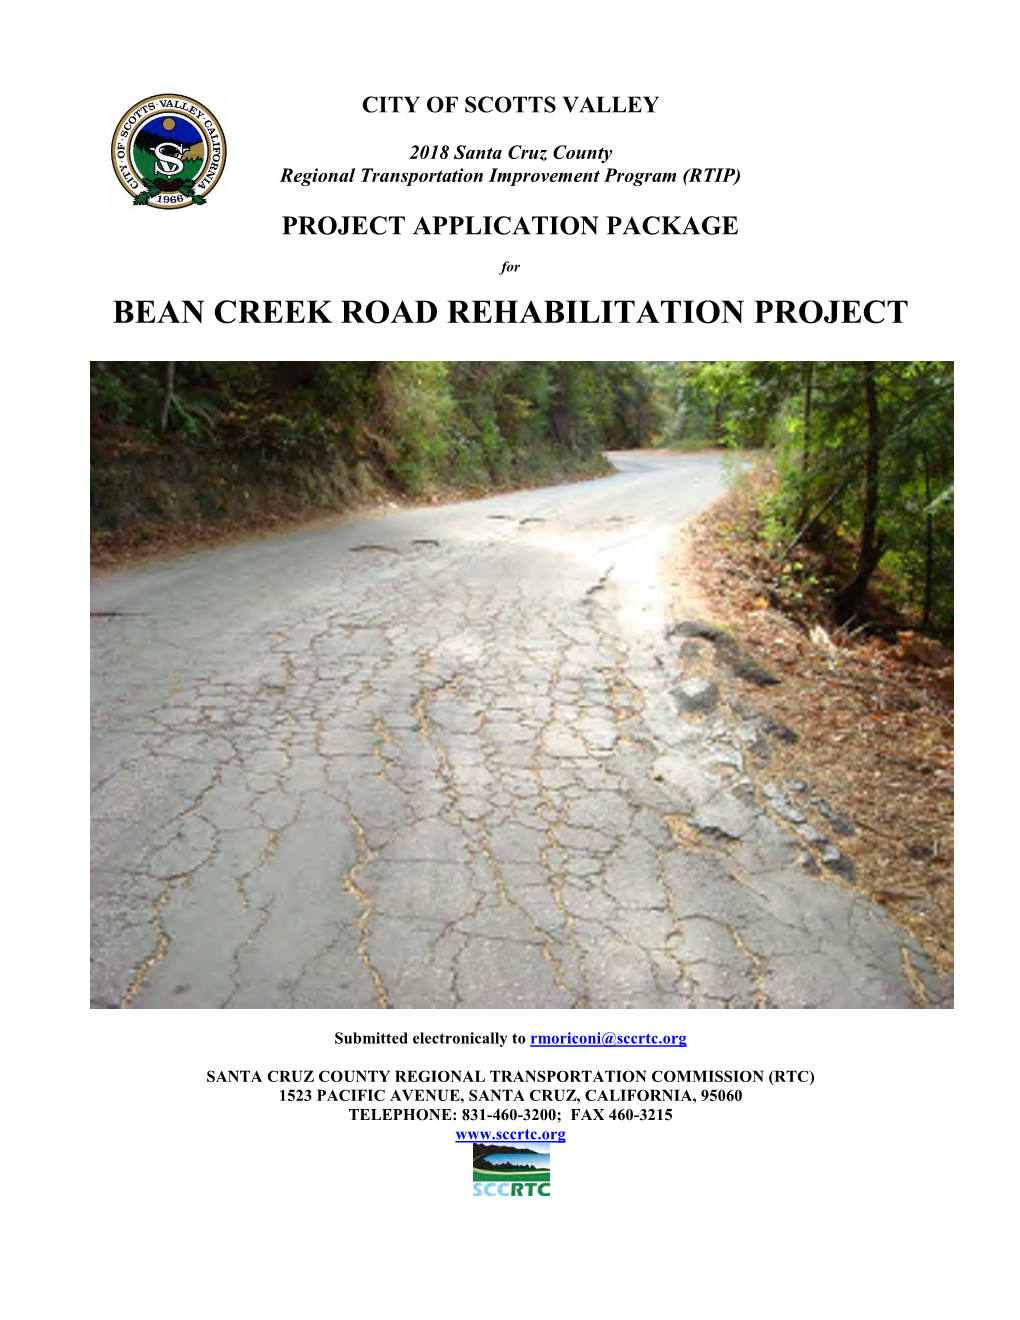 Bean Creek Road Rehabilitation Project